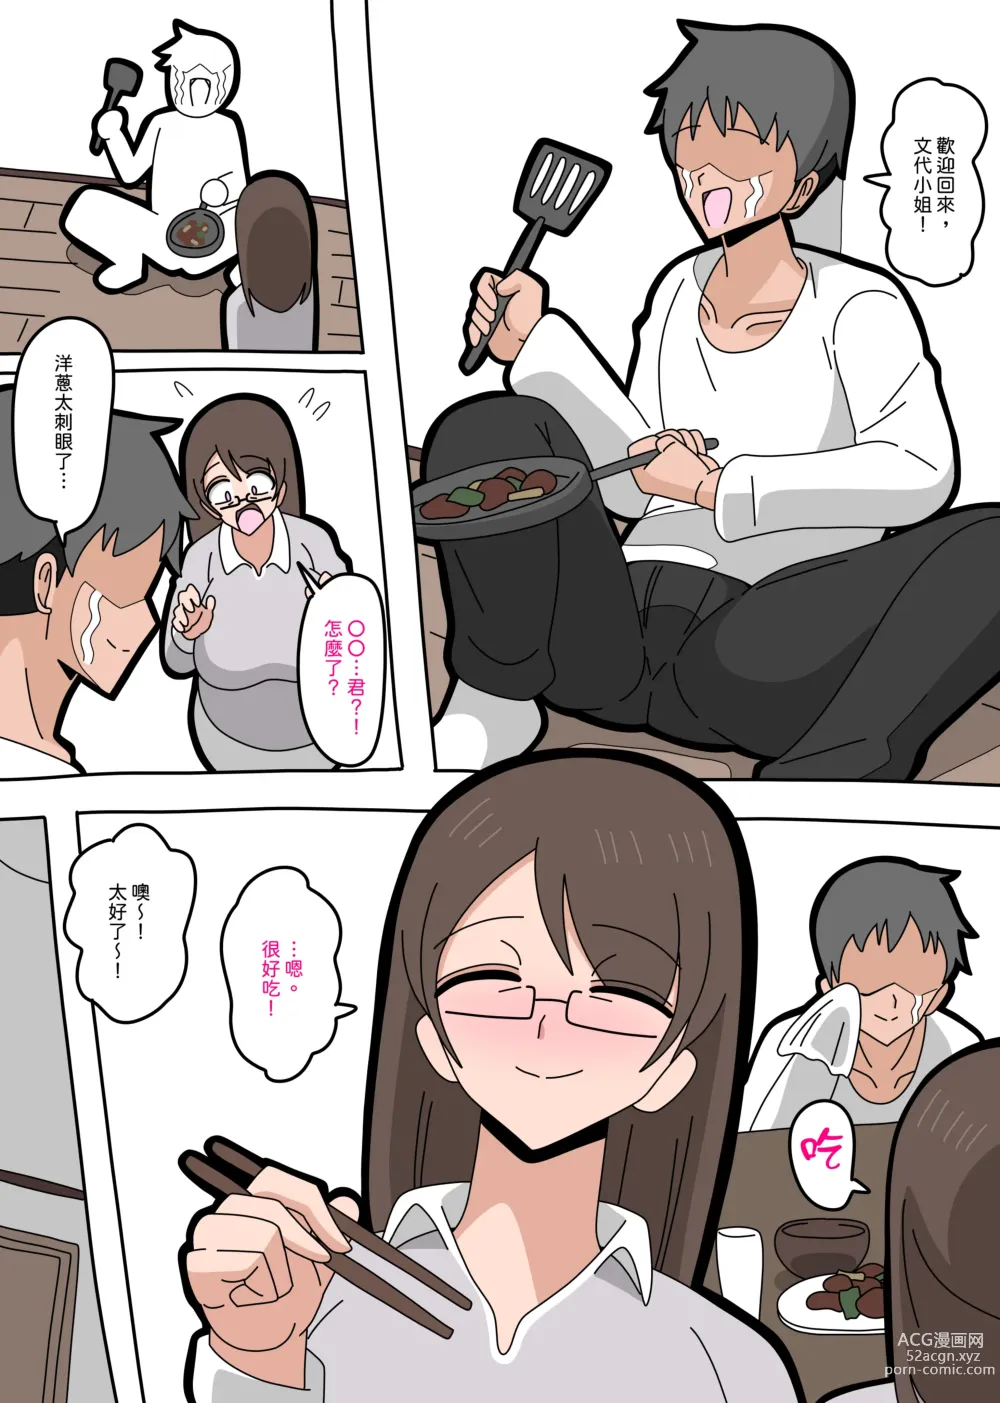 Page 6 of doujinshi 在相親派對上相遇的年齡差情侶